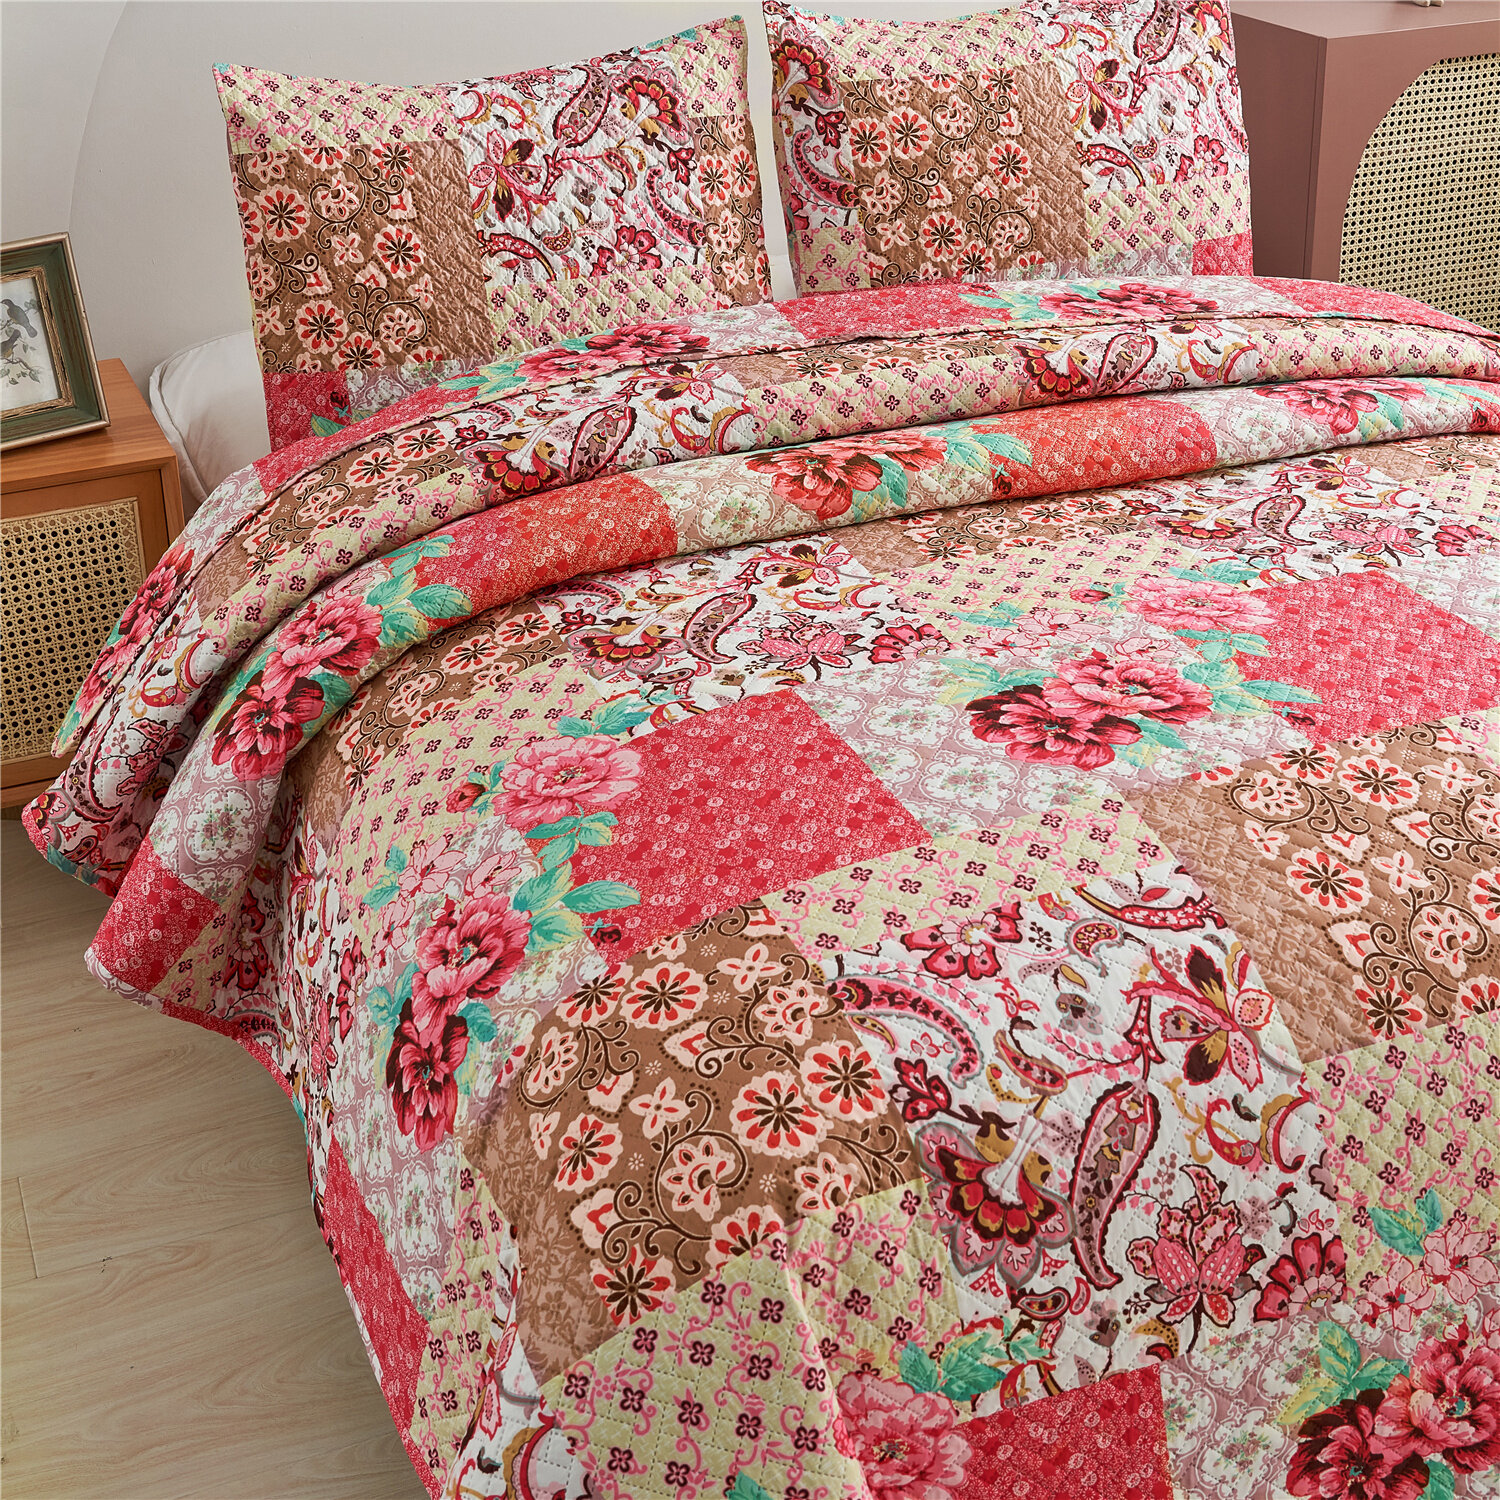 Bedspread 3 Piece Pink Patchwork Comforter Bed throw Bed Vintage Quilt Set 